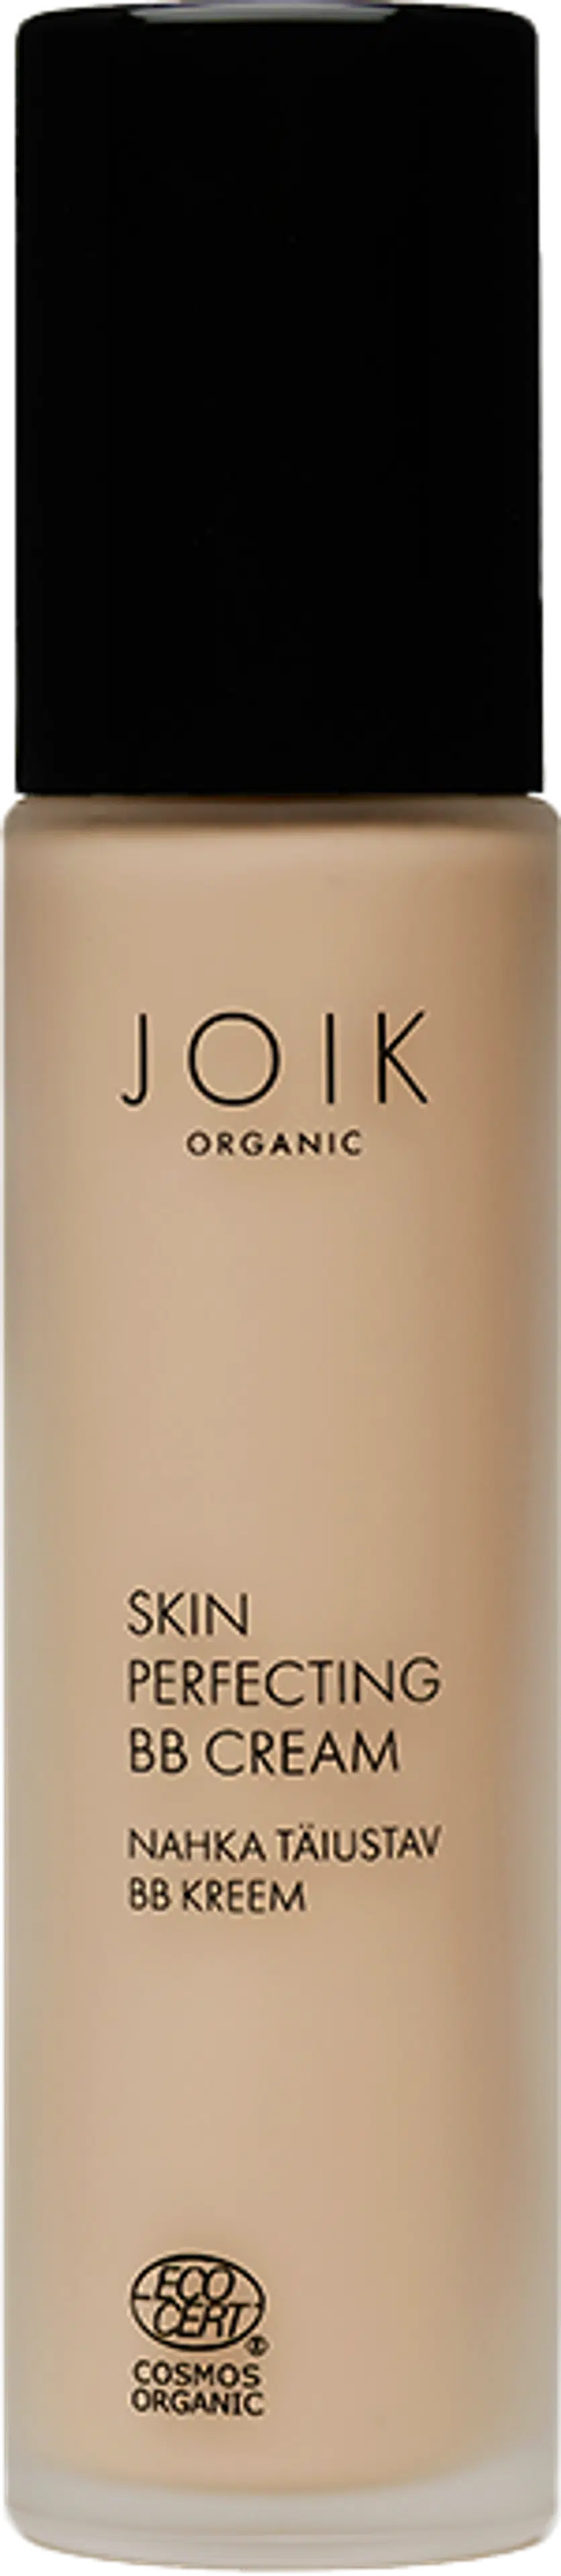 JOIK Organic Skin Perfecting BB Cream medium